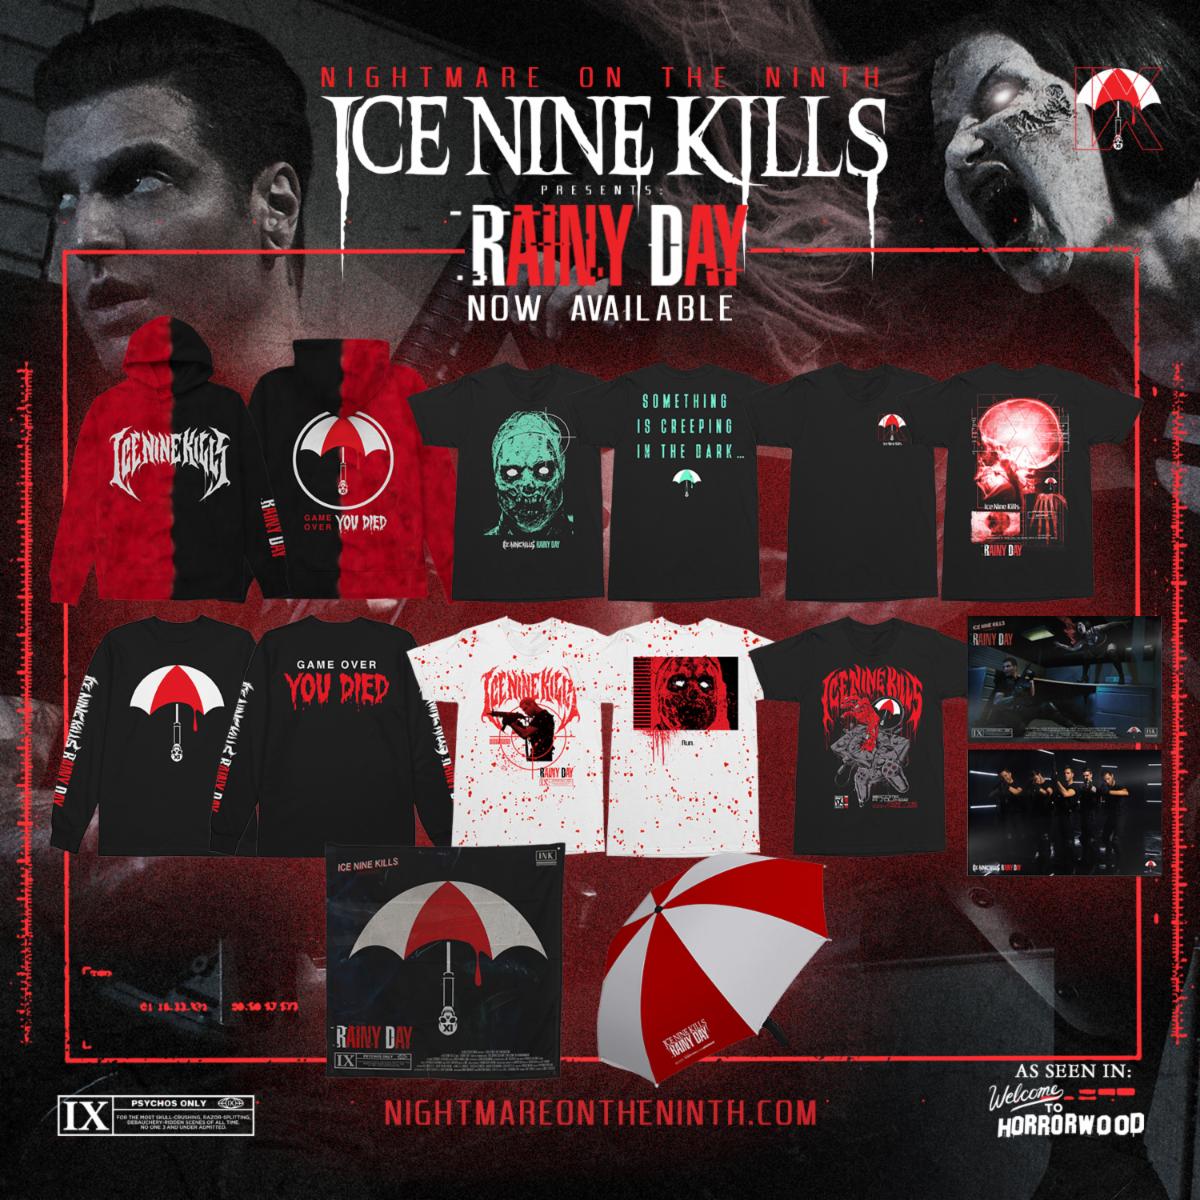 Ice Nine Kills Drop Zombie-Filled, Resident Evil Inspired New Single "Rainy Day"